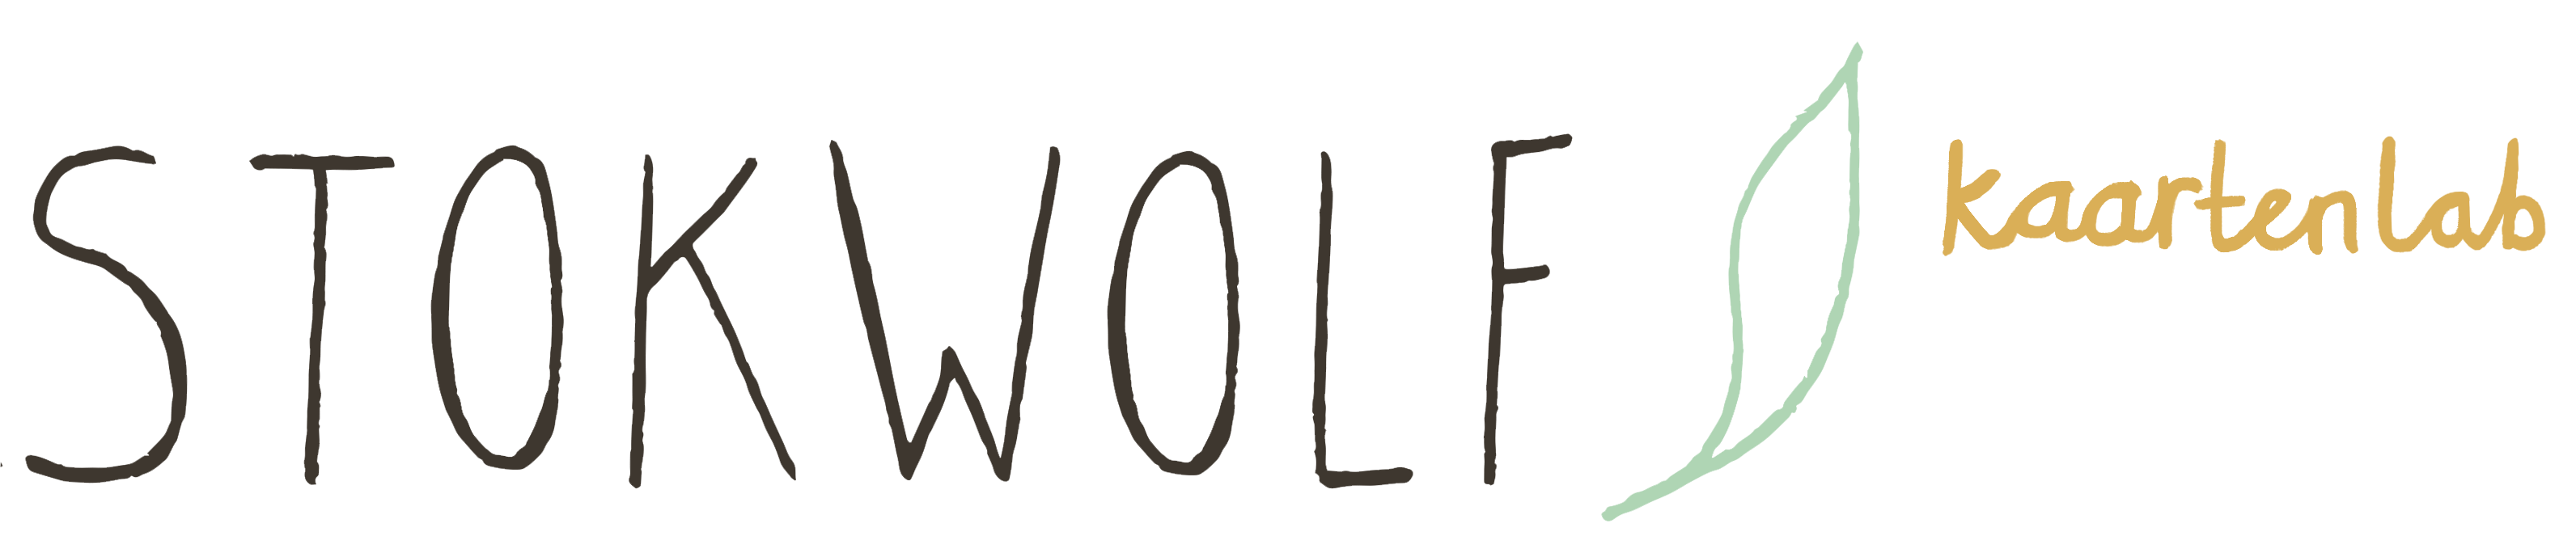 Stokwolf kaartenlab